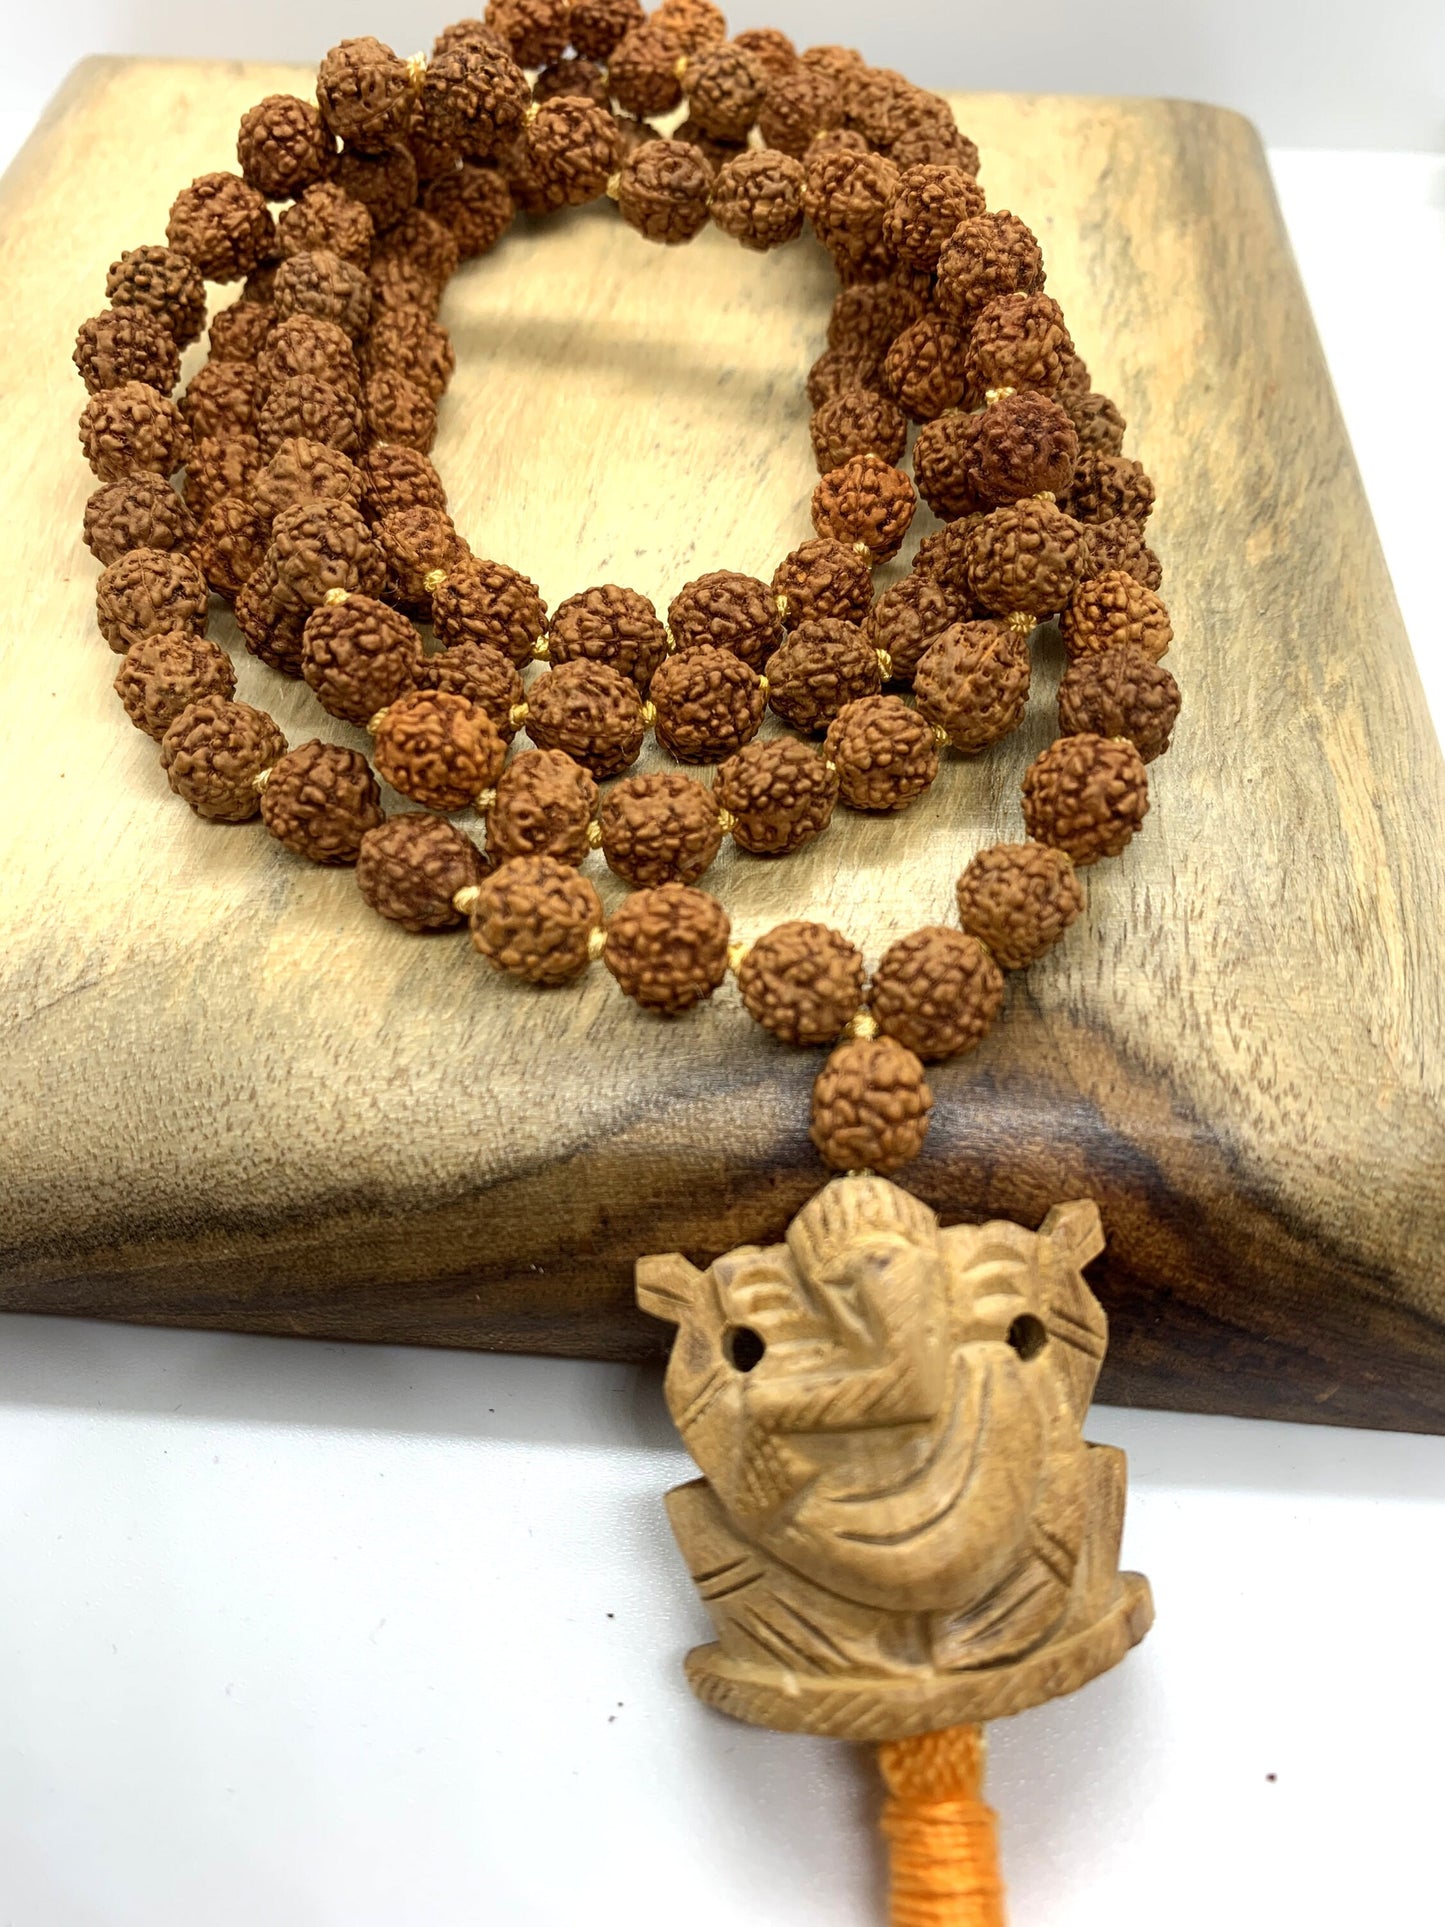 Ganesha Rudraksha Necklace,108 beads,8mm Natural Rudraksha Seed Beads, Ganesh Necklace, Rudraksha Necklace, Prayer, Mala, Wooden Pendant